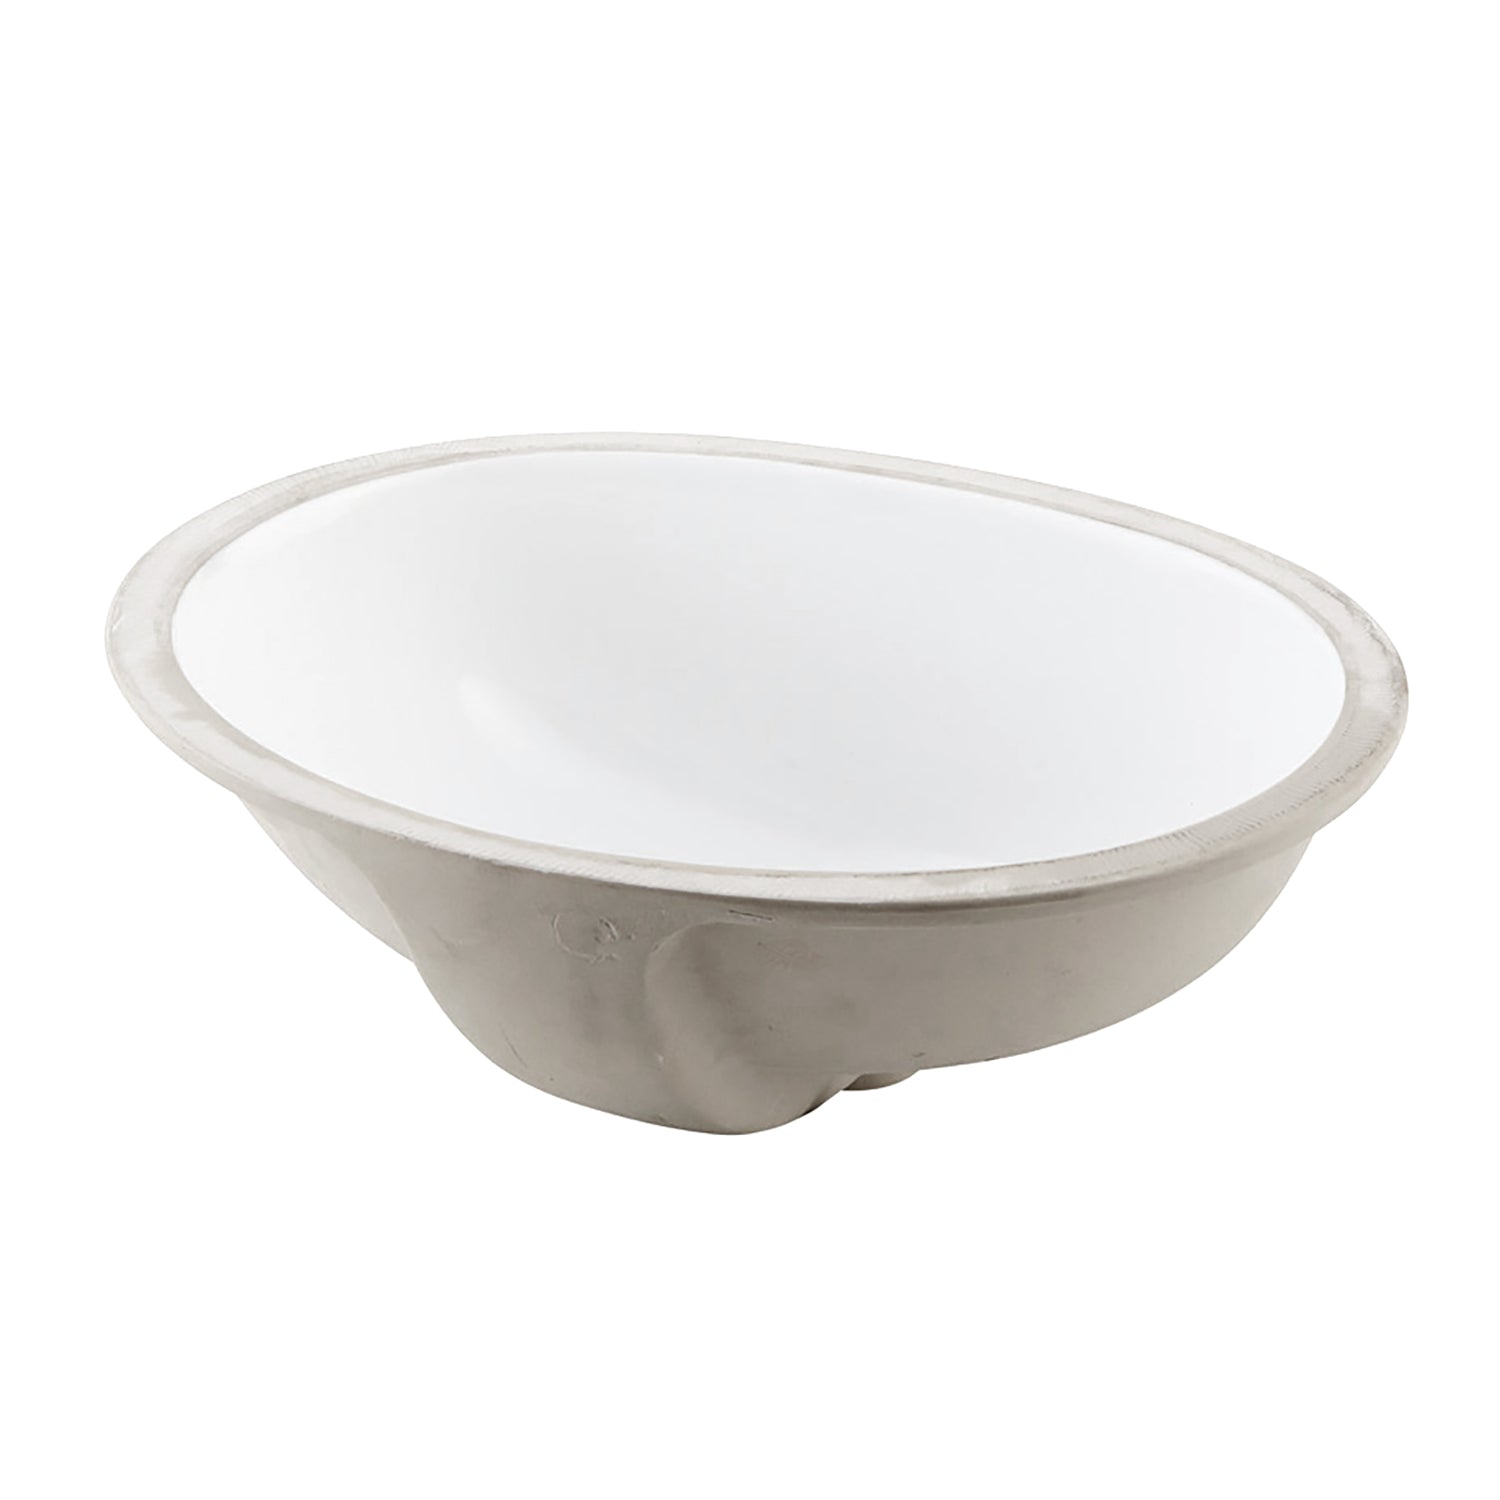 DAX Ceramic Oval Single Bowl Undermount Bathroom Sink, White Finish, 18 x 14-3/4 x 7-1/2 Inches (BSN-205B-W)